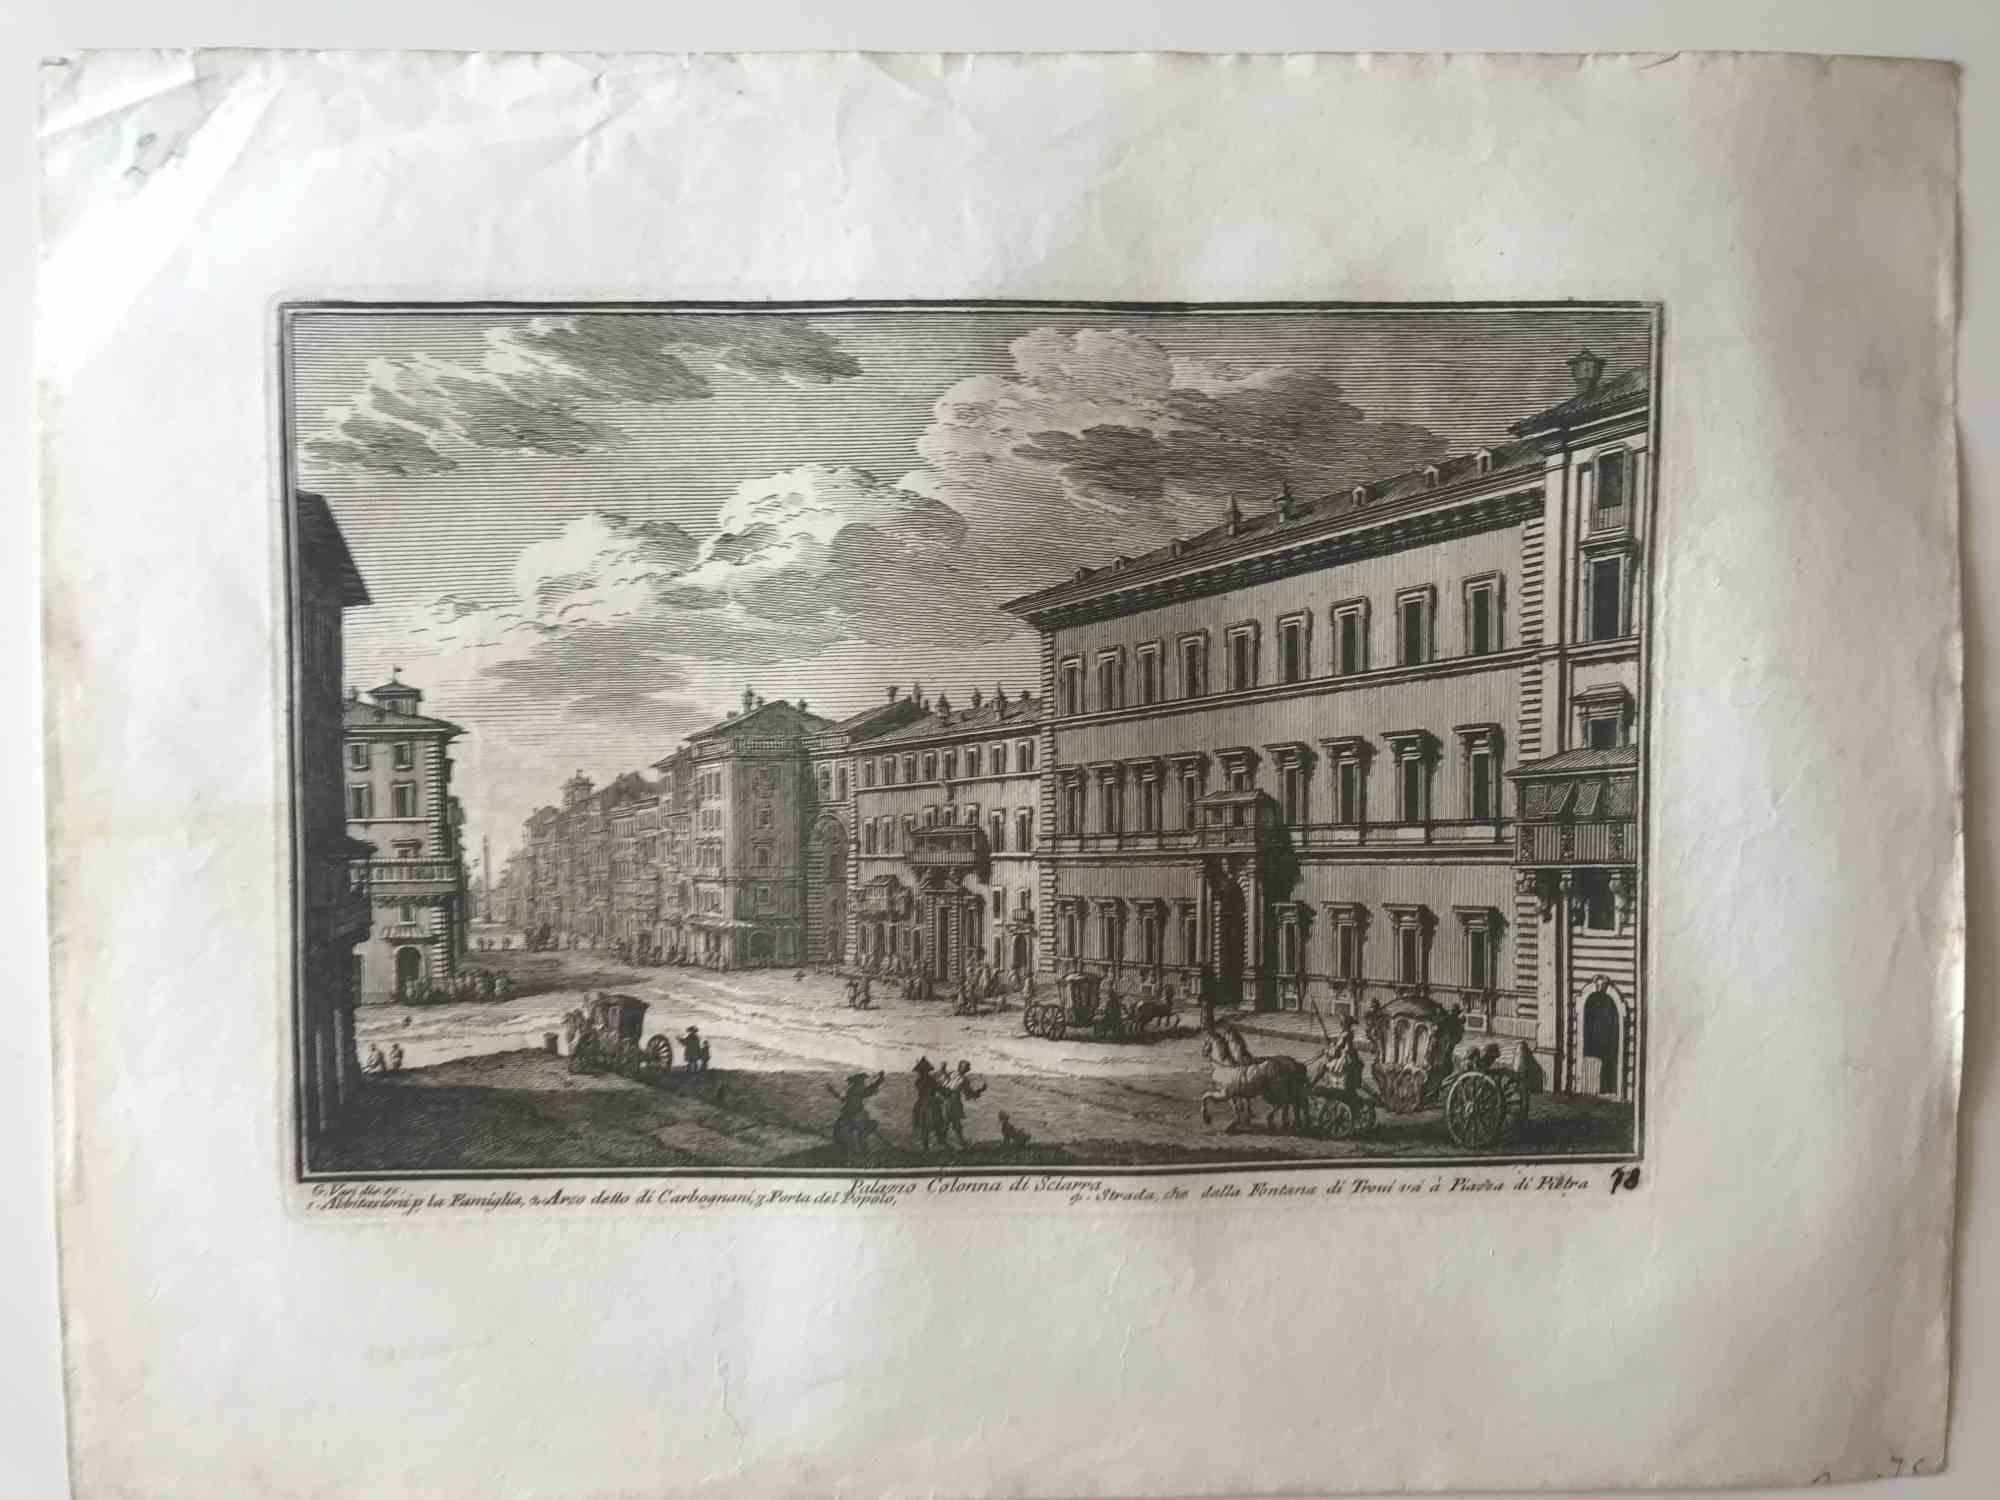 Giuseppe Vasi Figurative Print - Palazzo Colonna di Sciarra - Etching by G. Vasi - Late 18th century